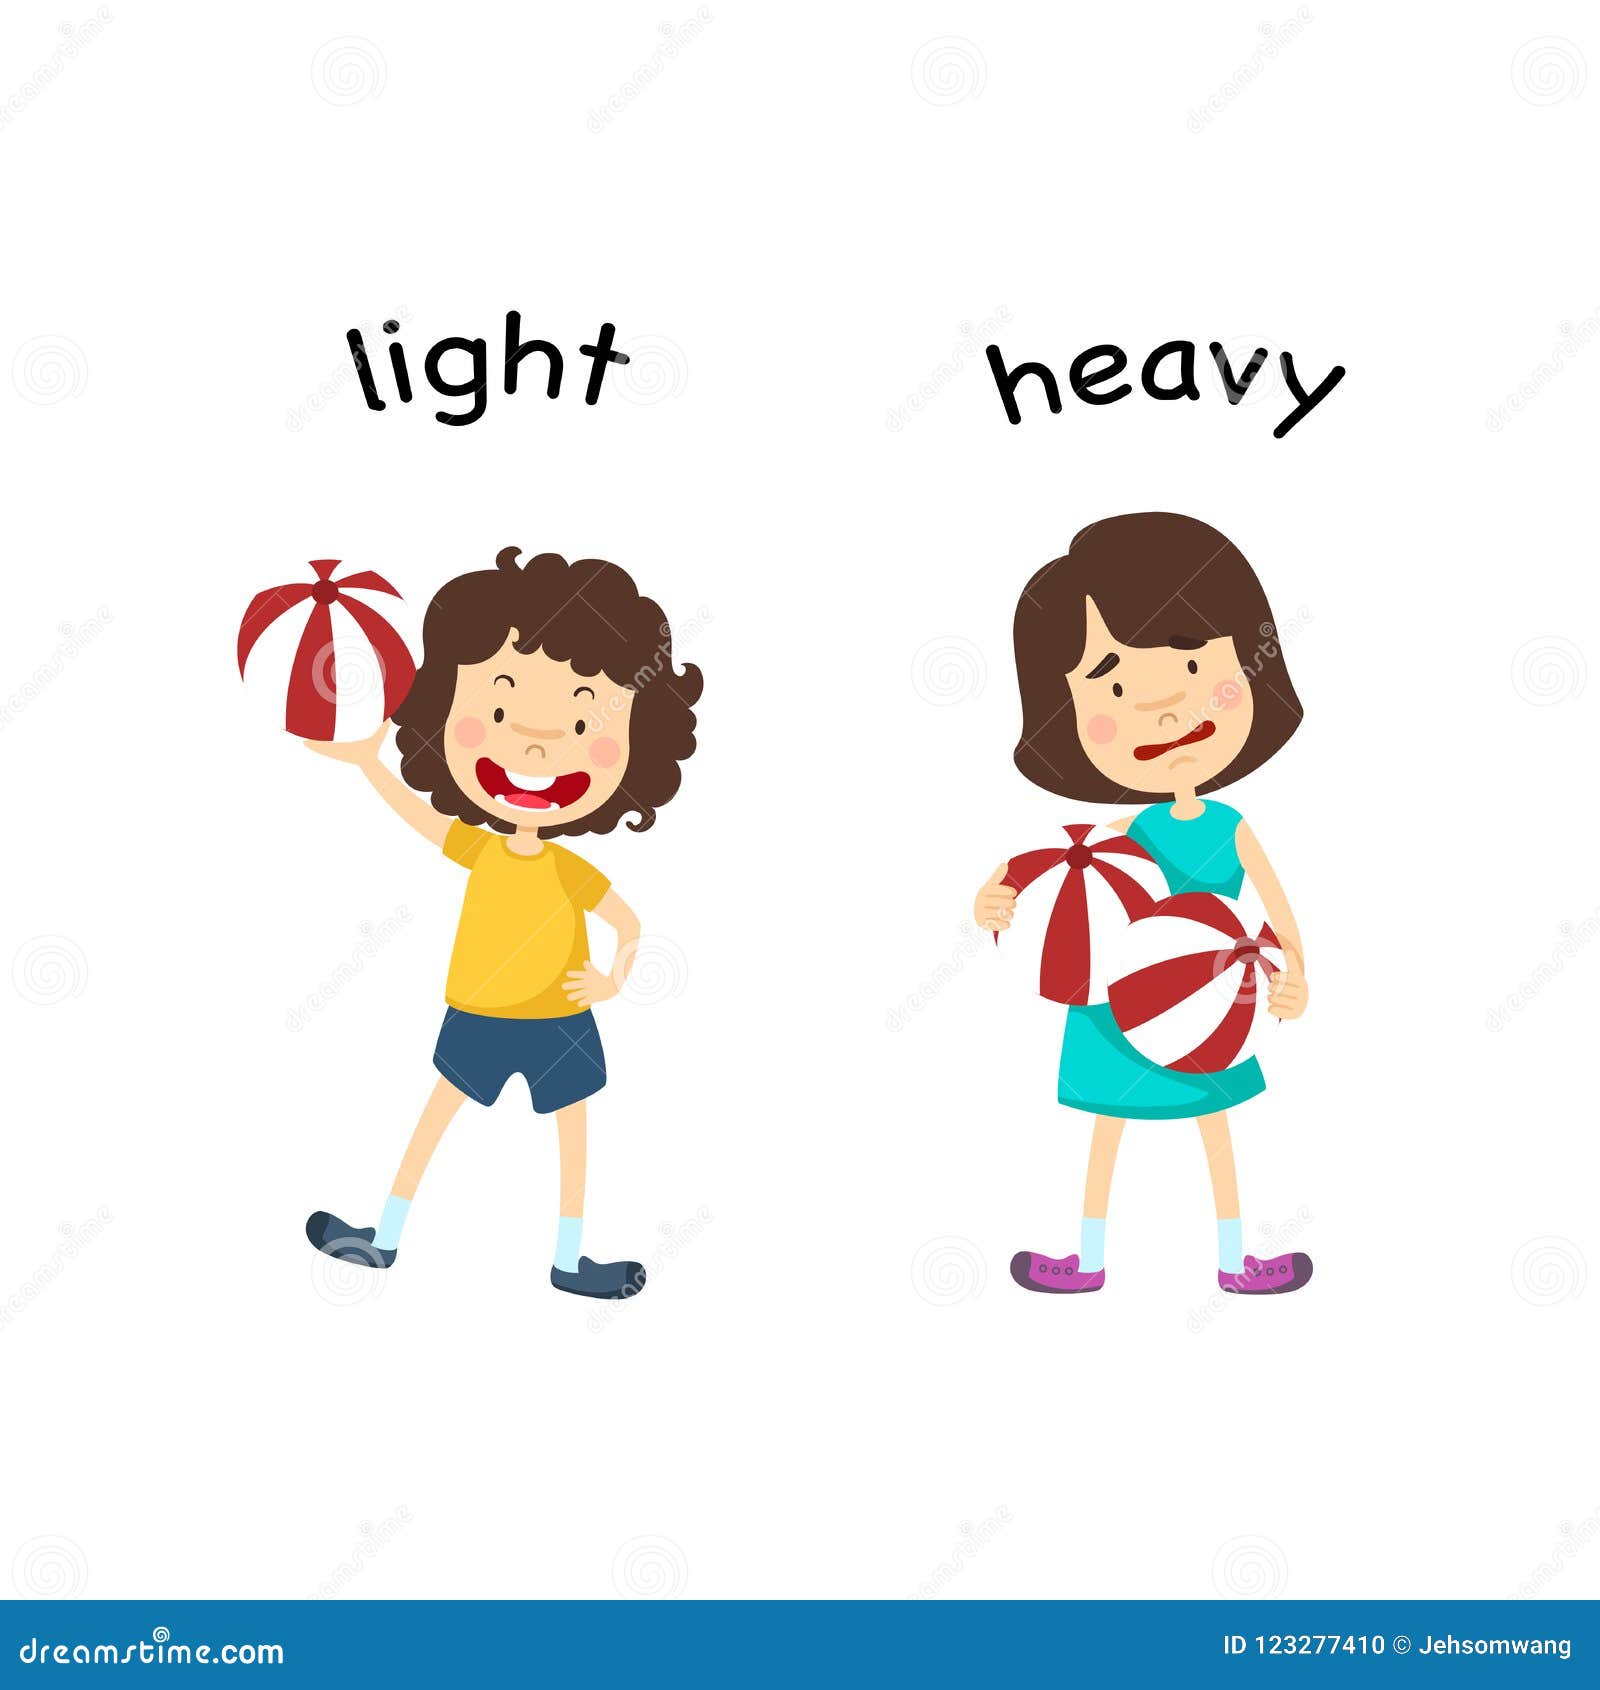 Heavy picture. Heavy Light. Heavy Light картинки для детей. Opposites картинки для детей. Heavy Light opposites.